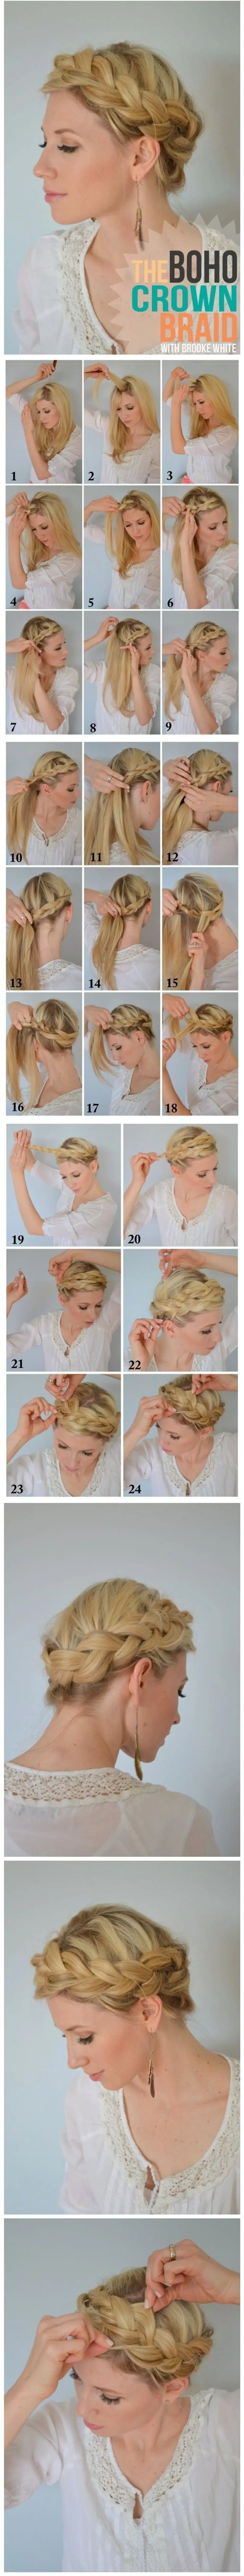 How to Make Boho Crown Braid Tutorial